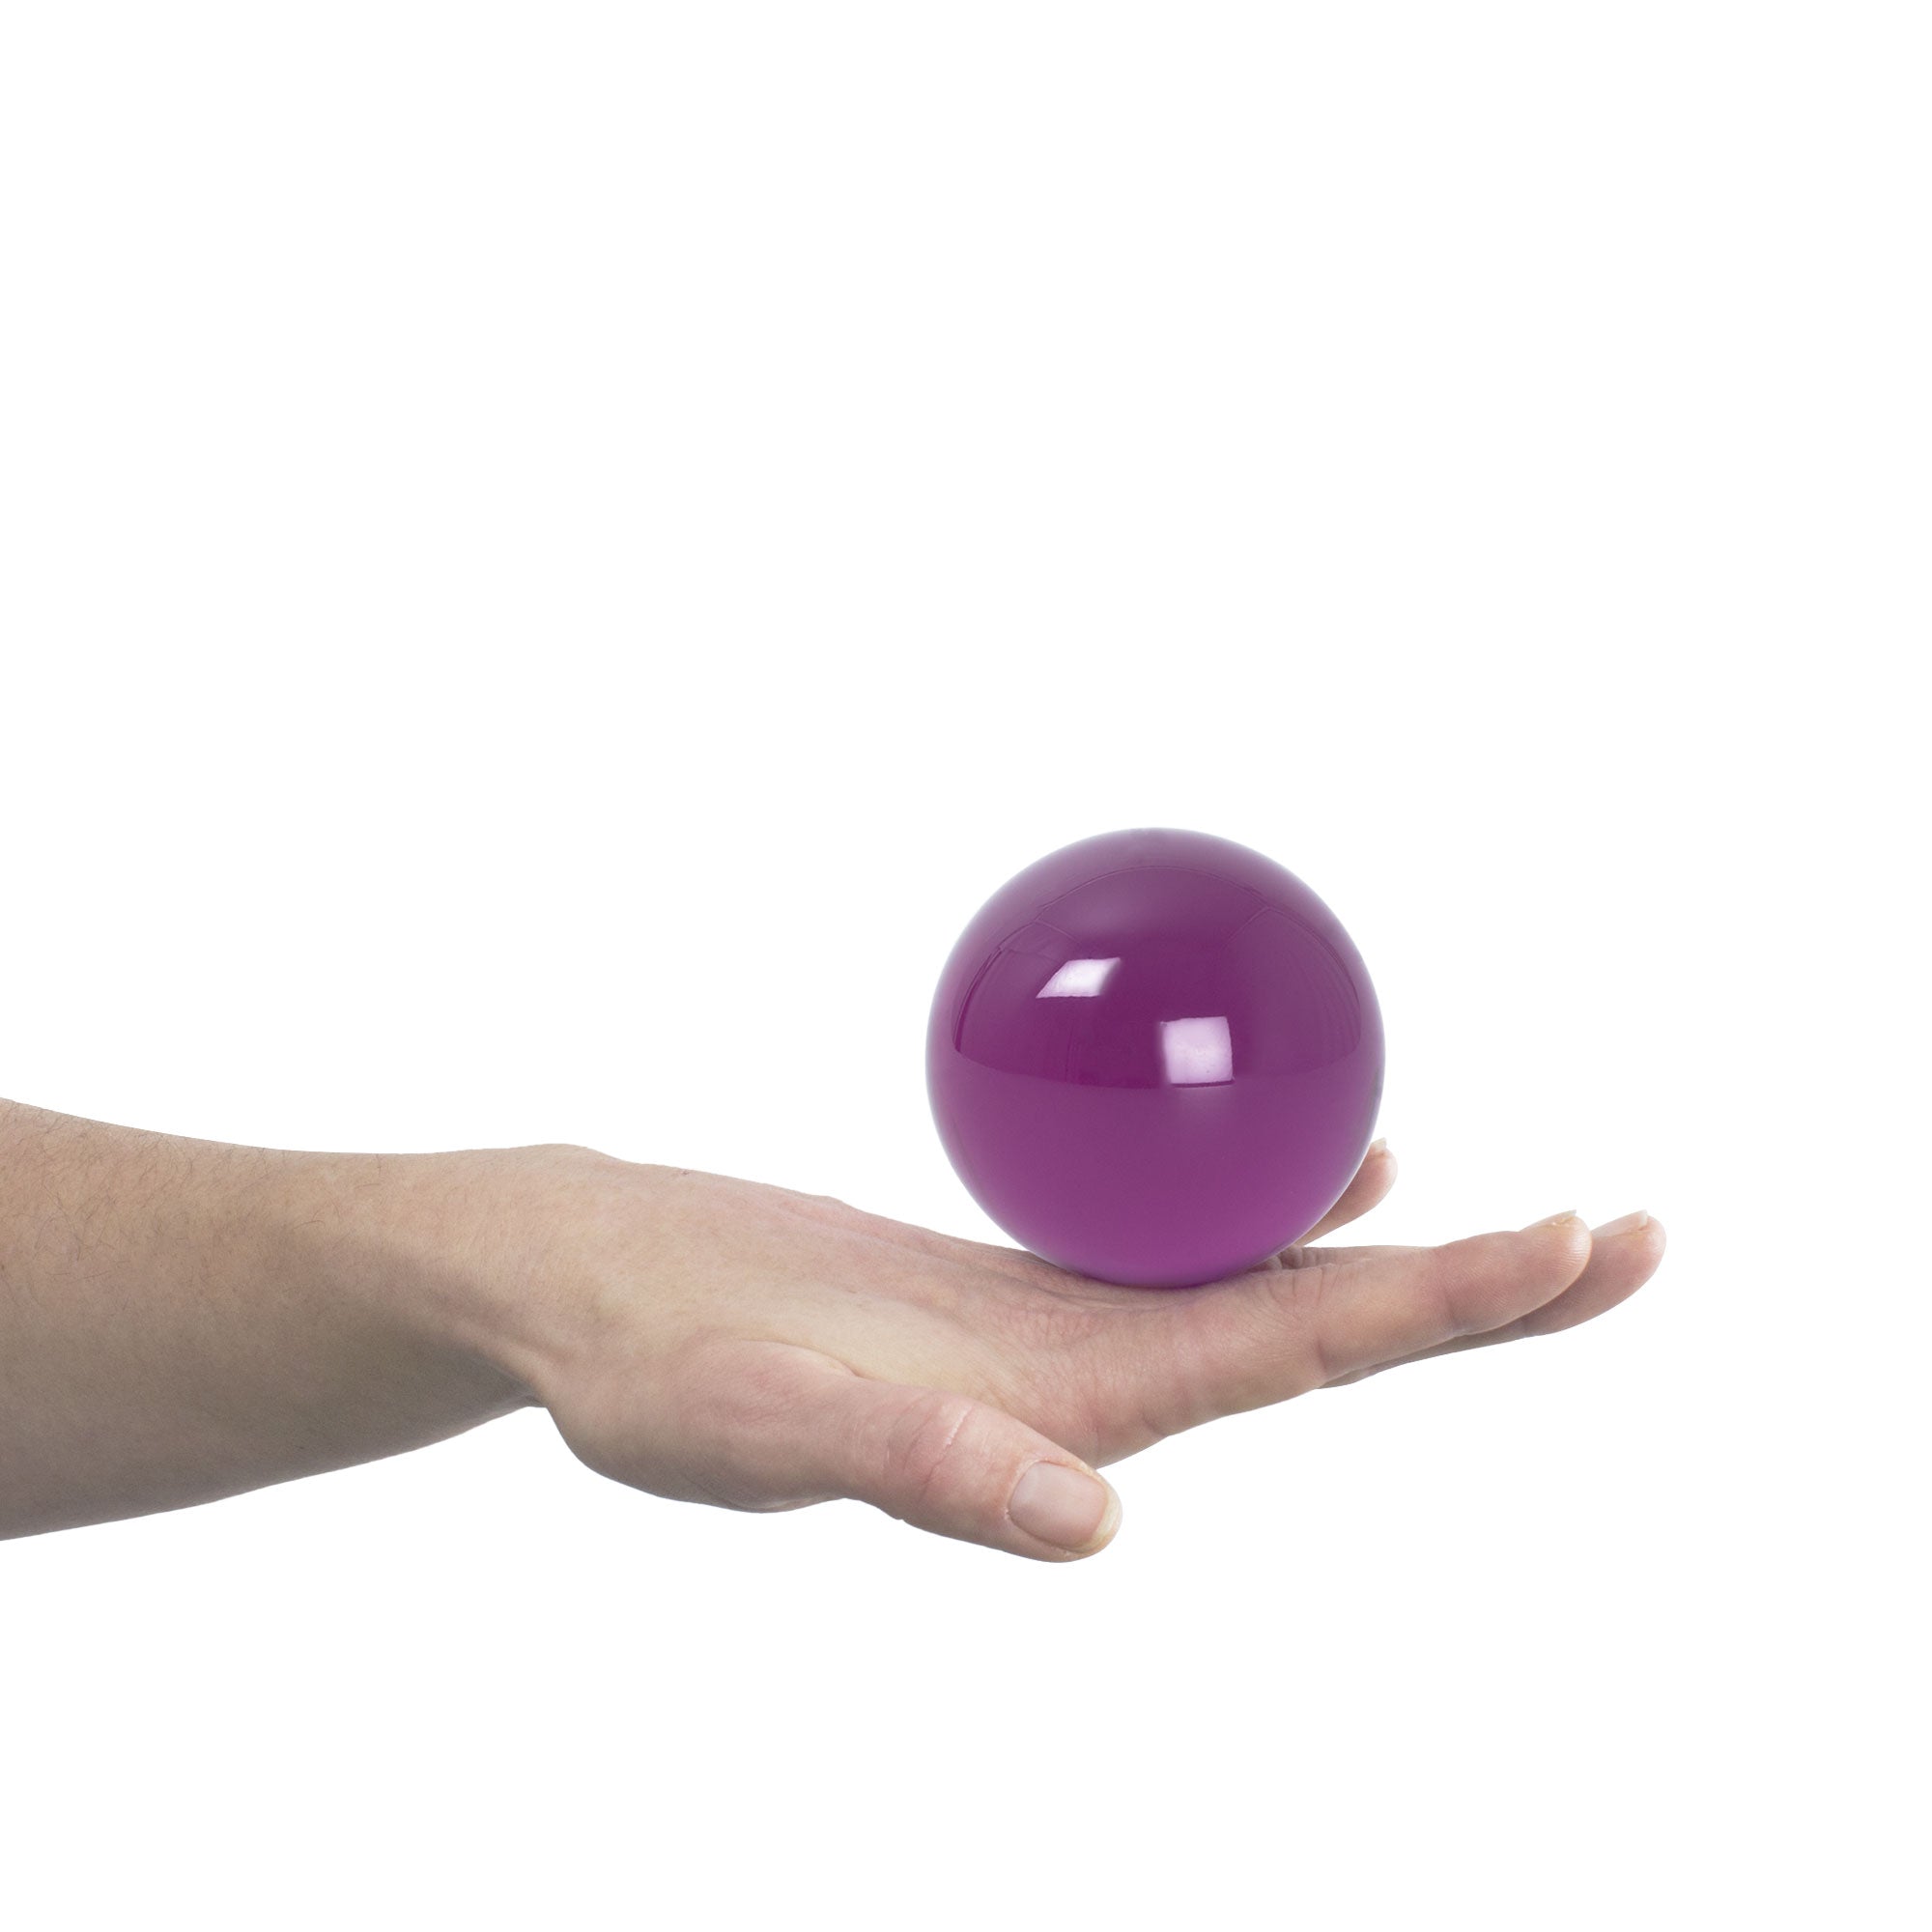 75mm purple contact ball balanced on hand